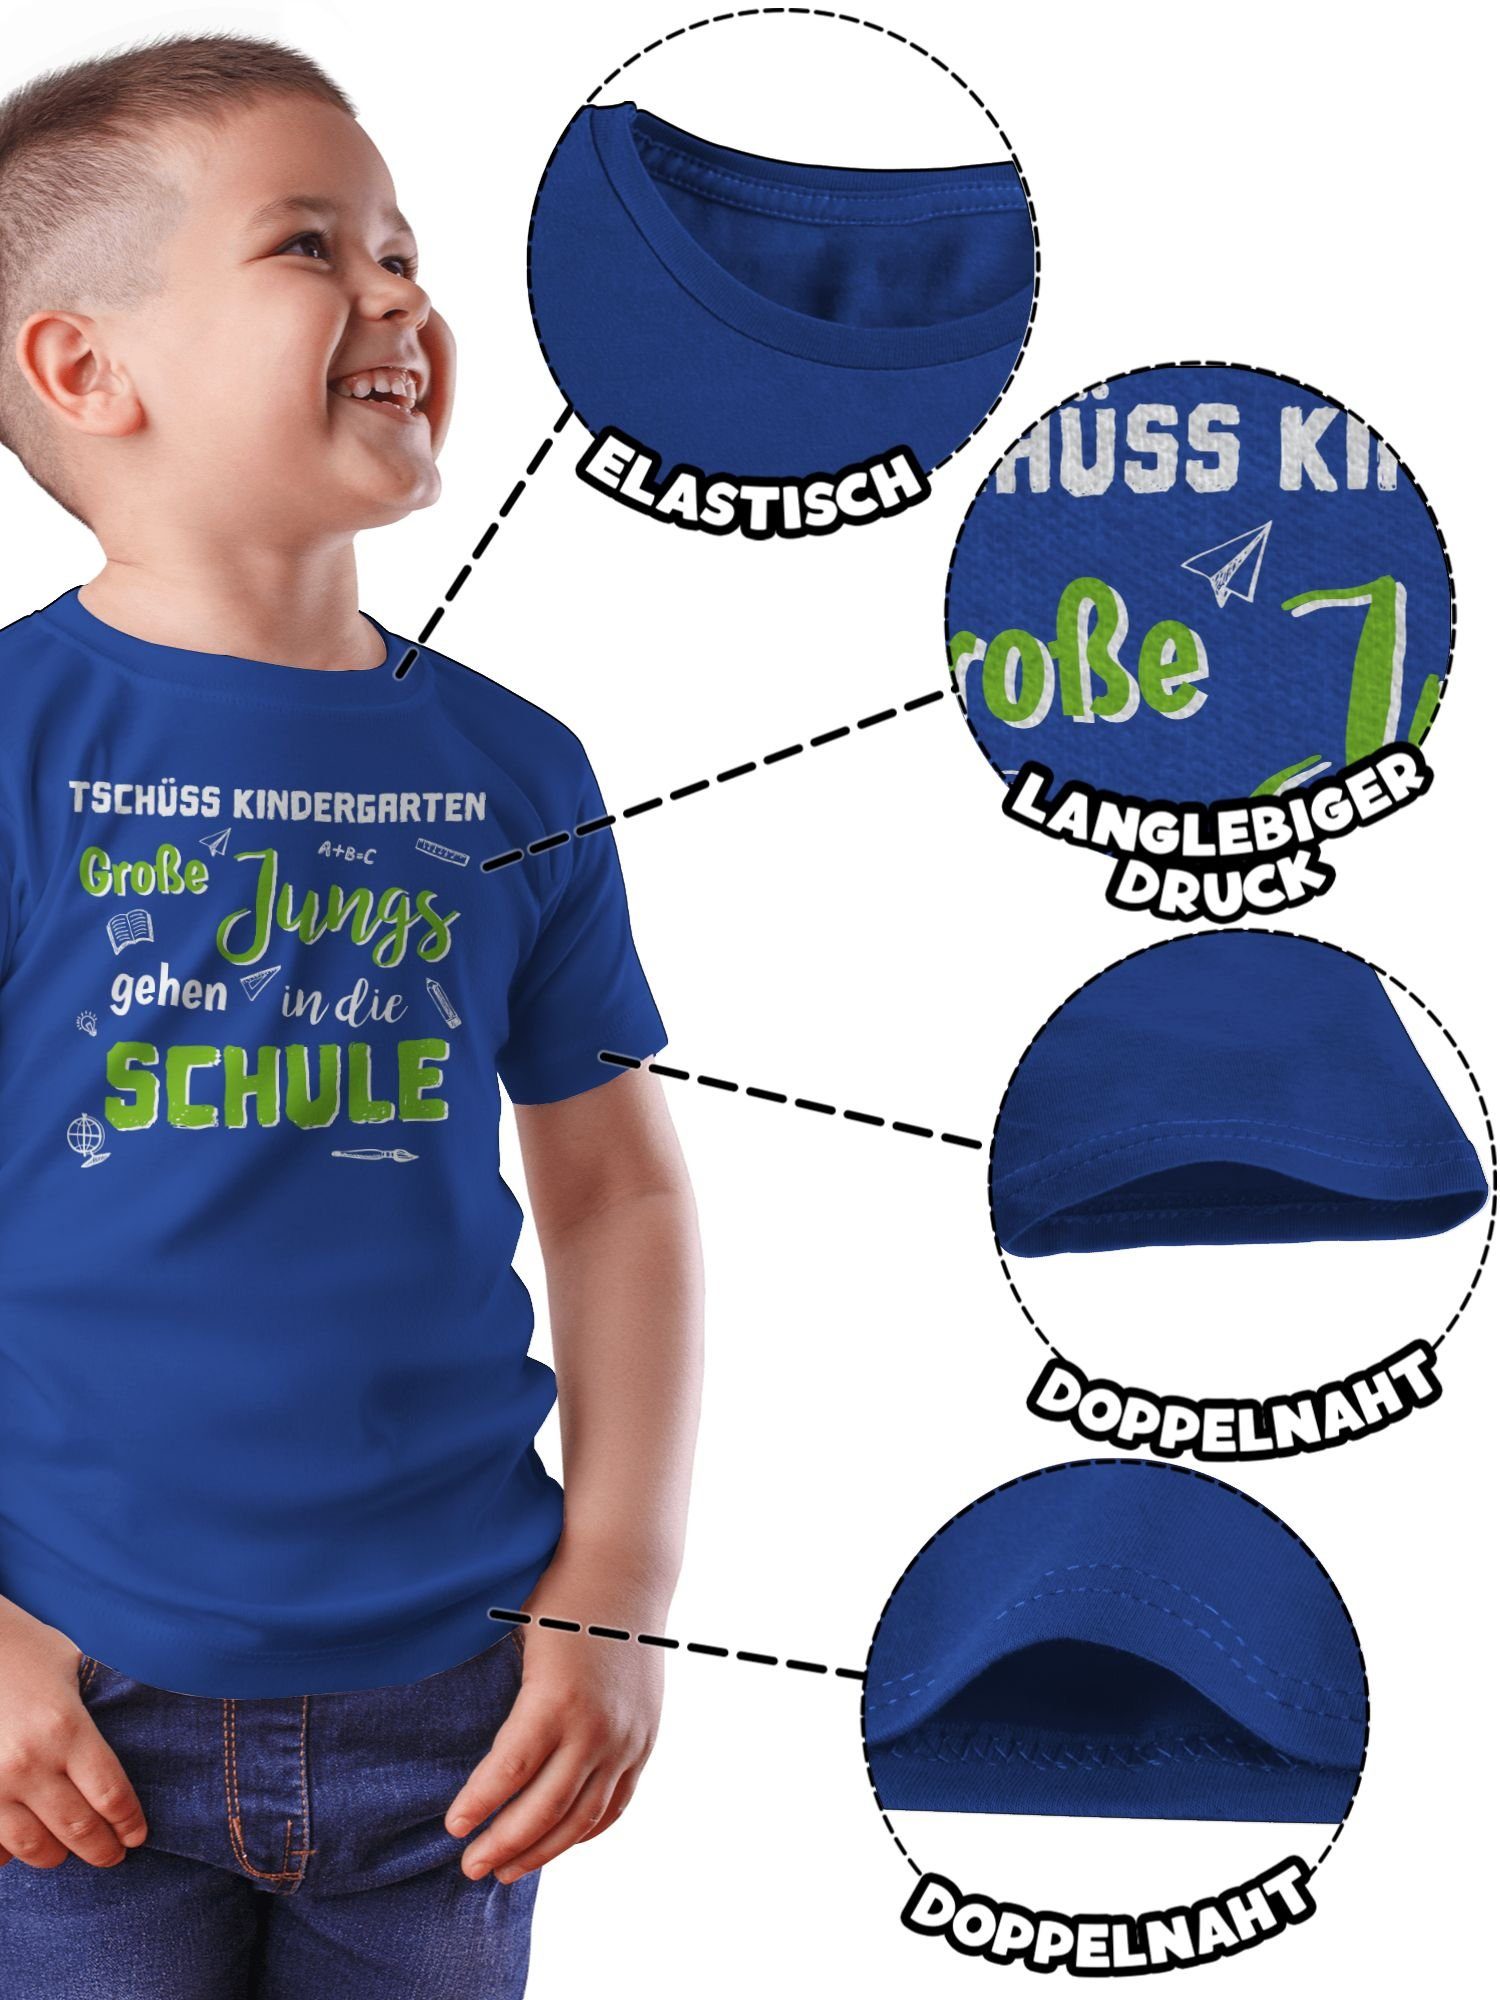 2 in Große Royalblau Junge T-Shirt Geschenke die gehen Jungs Schule Shirtracer Kindergarten Einschulung Schulanfang Tschüss